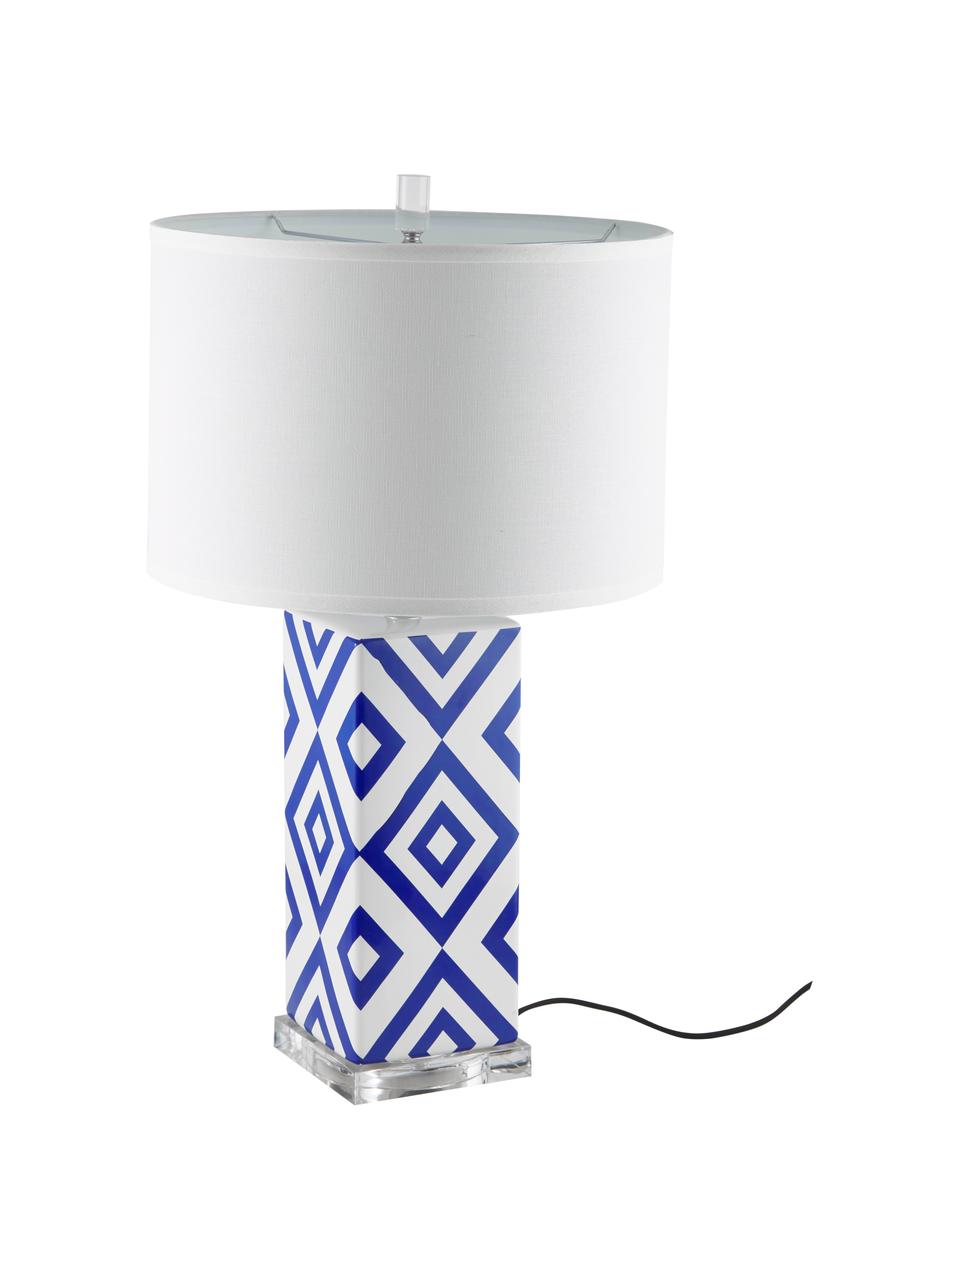 Grote tafellampen Patricia, 2 stuks, Lampenkap: textiel, Lampvoet: keramiek, acryl, Blauw, wit, Ø 38 x H 69 cm